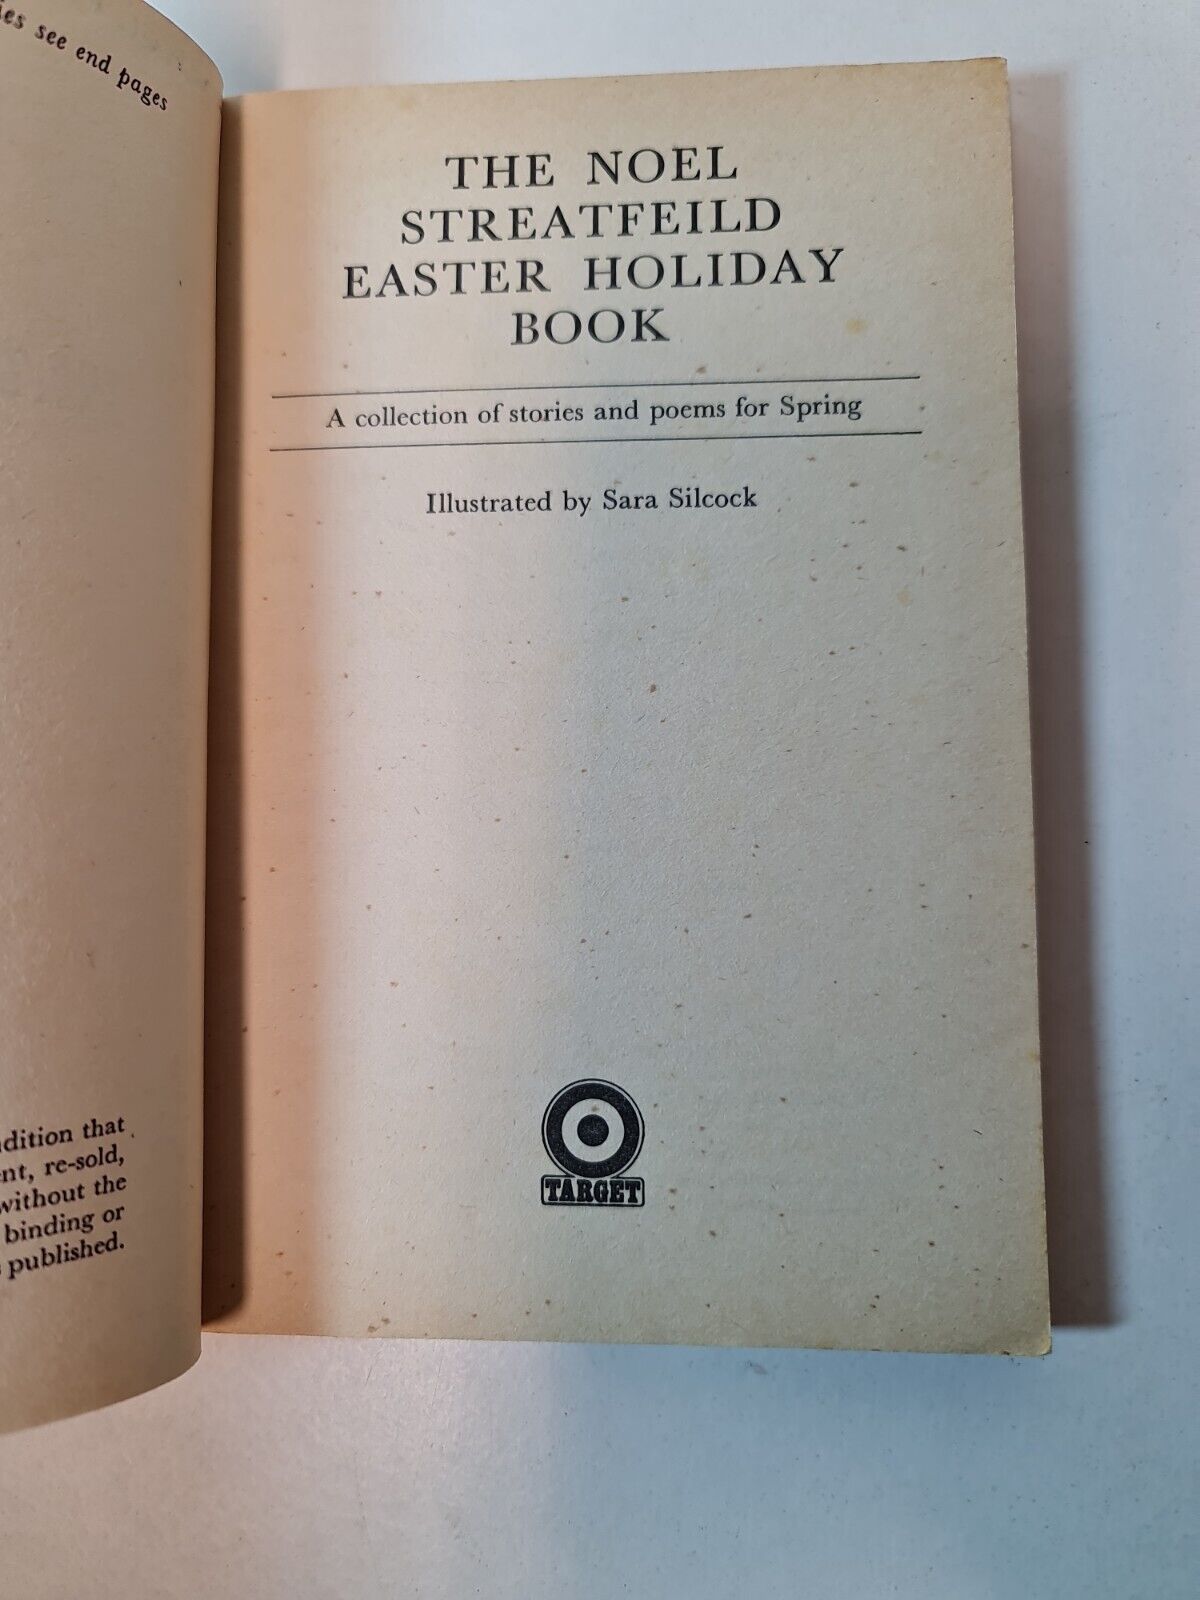 Easter Holiday Book by Noel Streatfeild (1976)